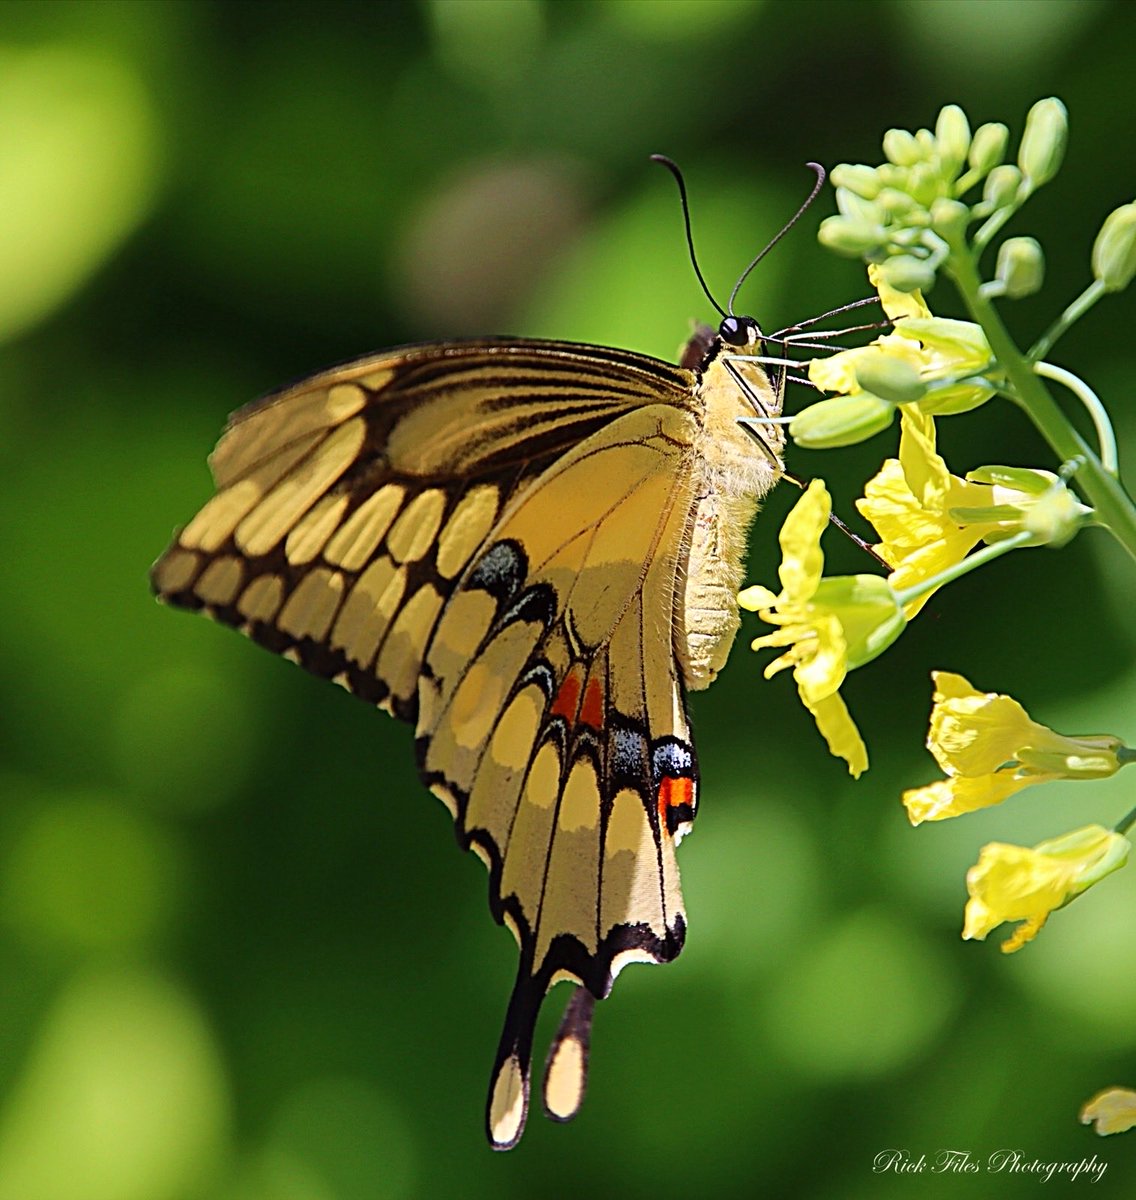 Giant Swallowtail Butterfly at work. #Butterflies #Flowers #Nature #TwitterNatureCommunity #WildlifePhotography #Photography #SundayYellow